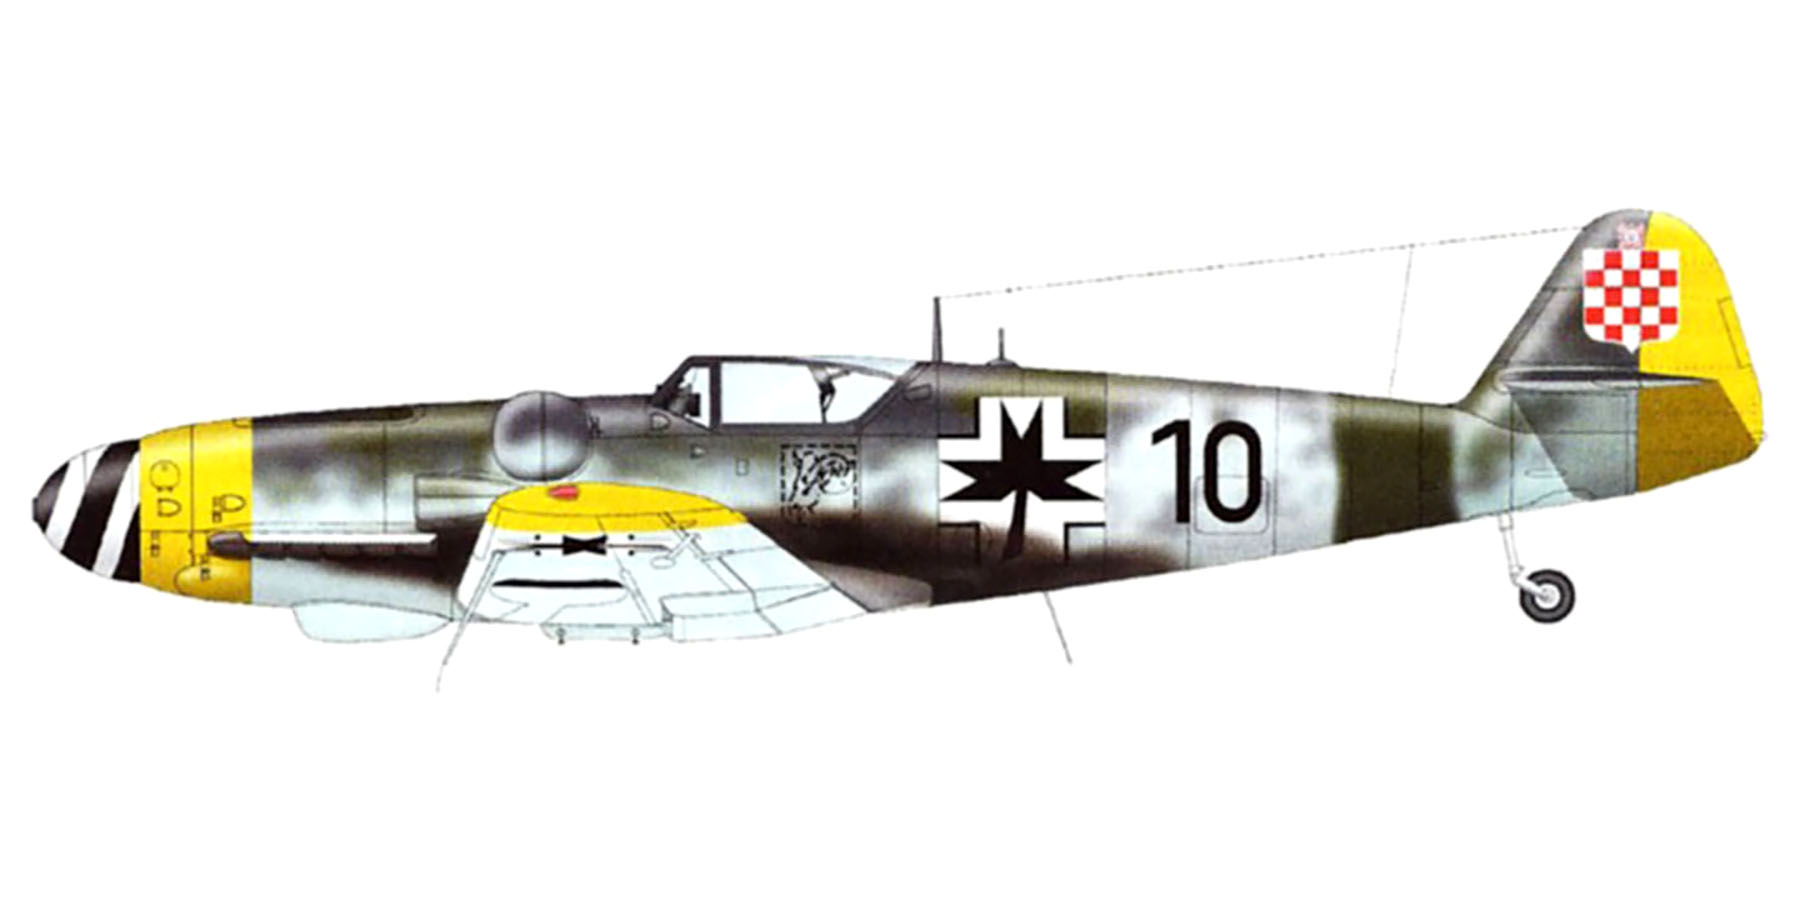 Messerschmitt Bf 109G14 Erla 2.Kroat JG Black 10 surrendered Falconara near Ancona 16th Apr 1945 0B